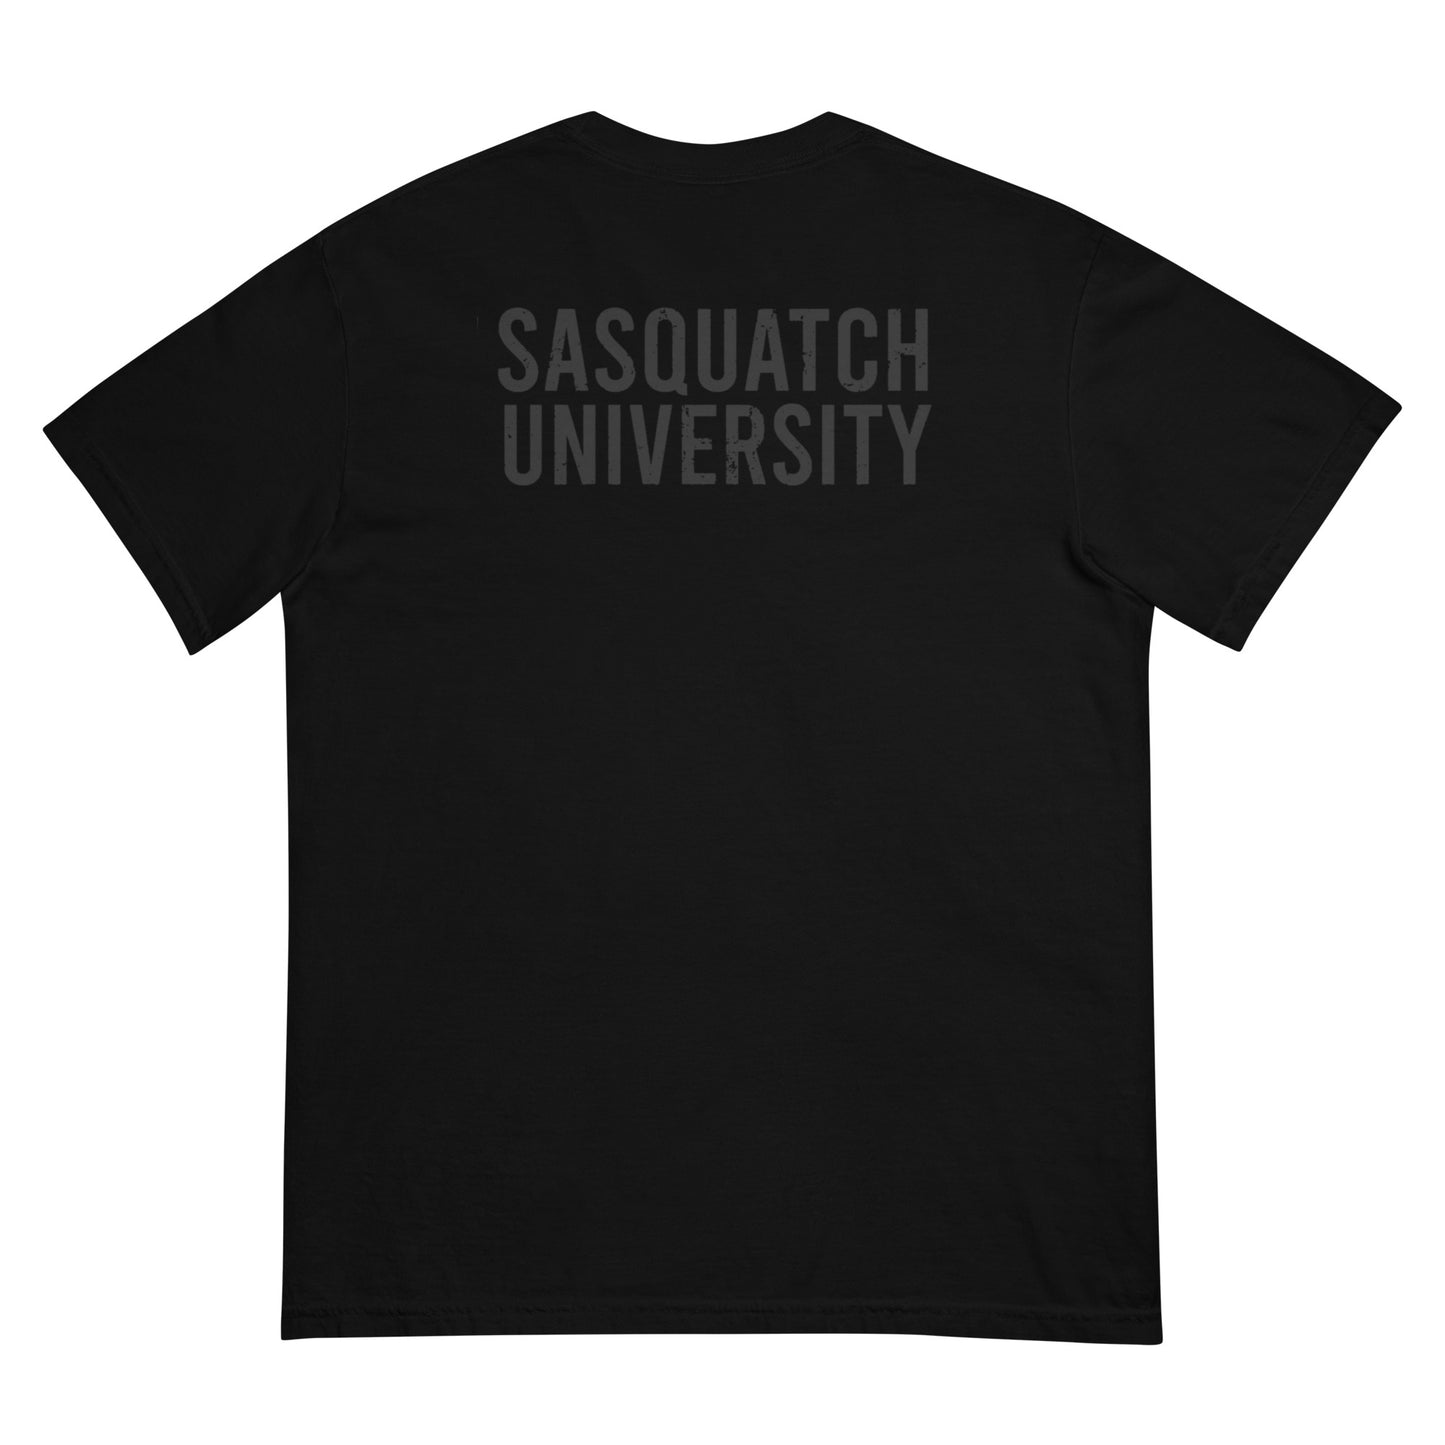 Sasquatch University heavyweight t-shirt